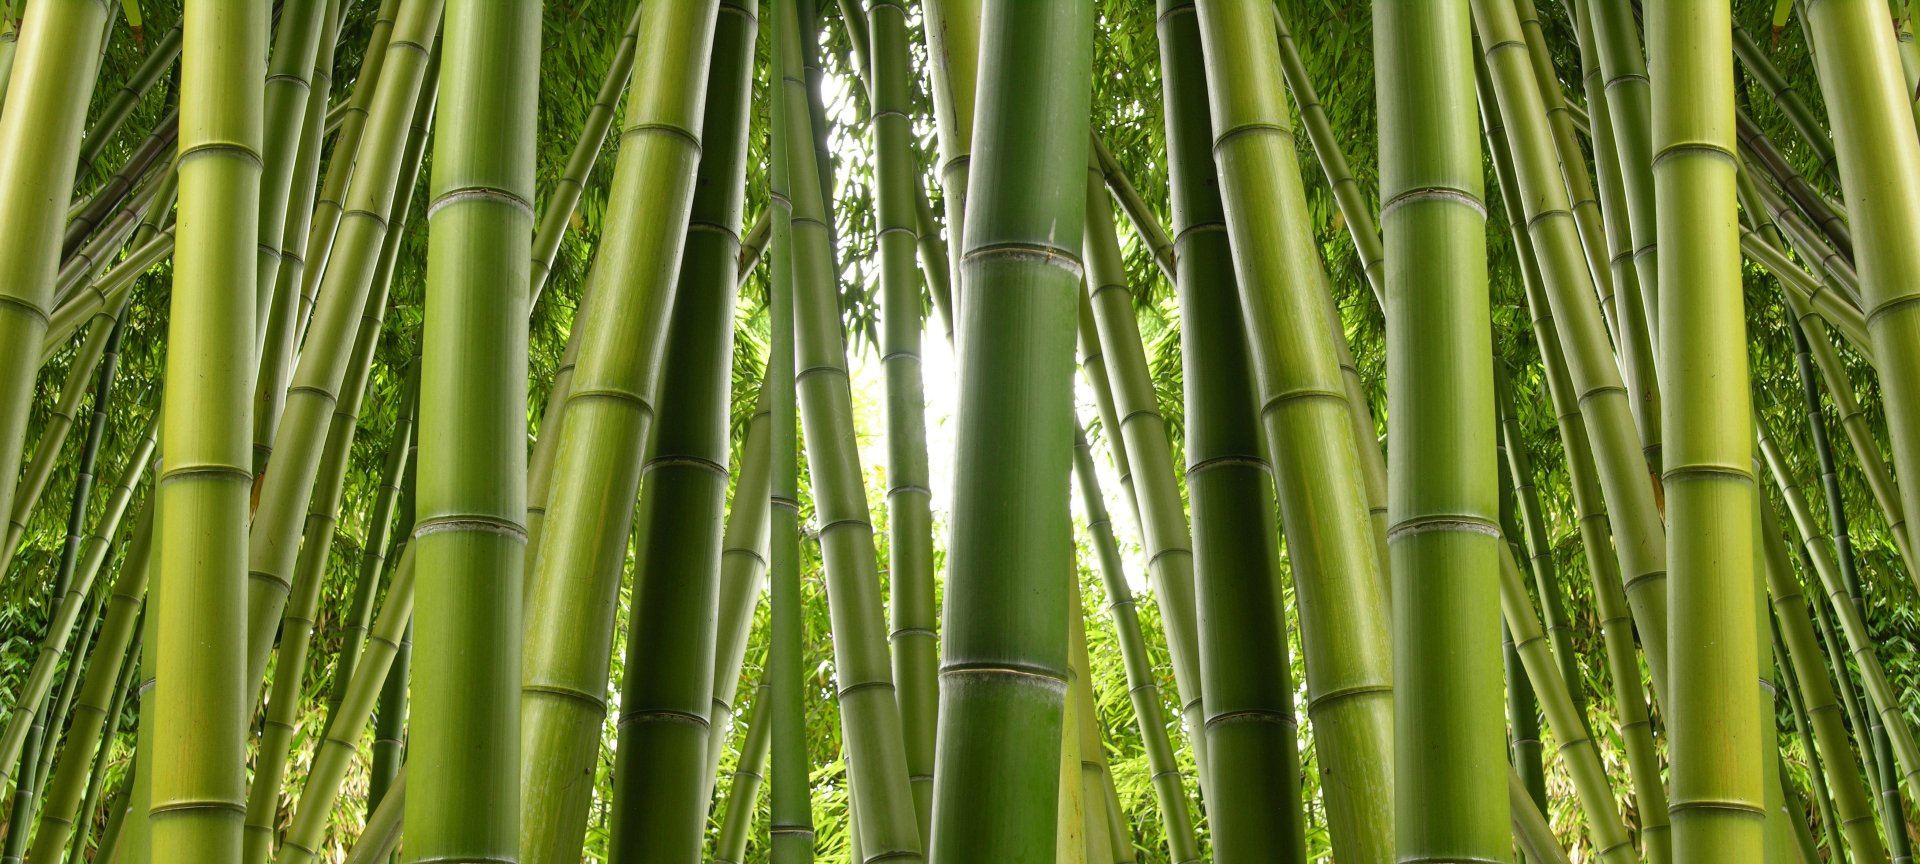 Nature Bamboo K Ultra Hd Wallpaper